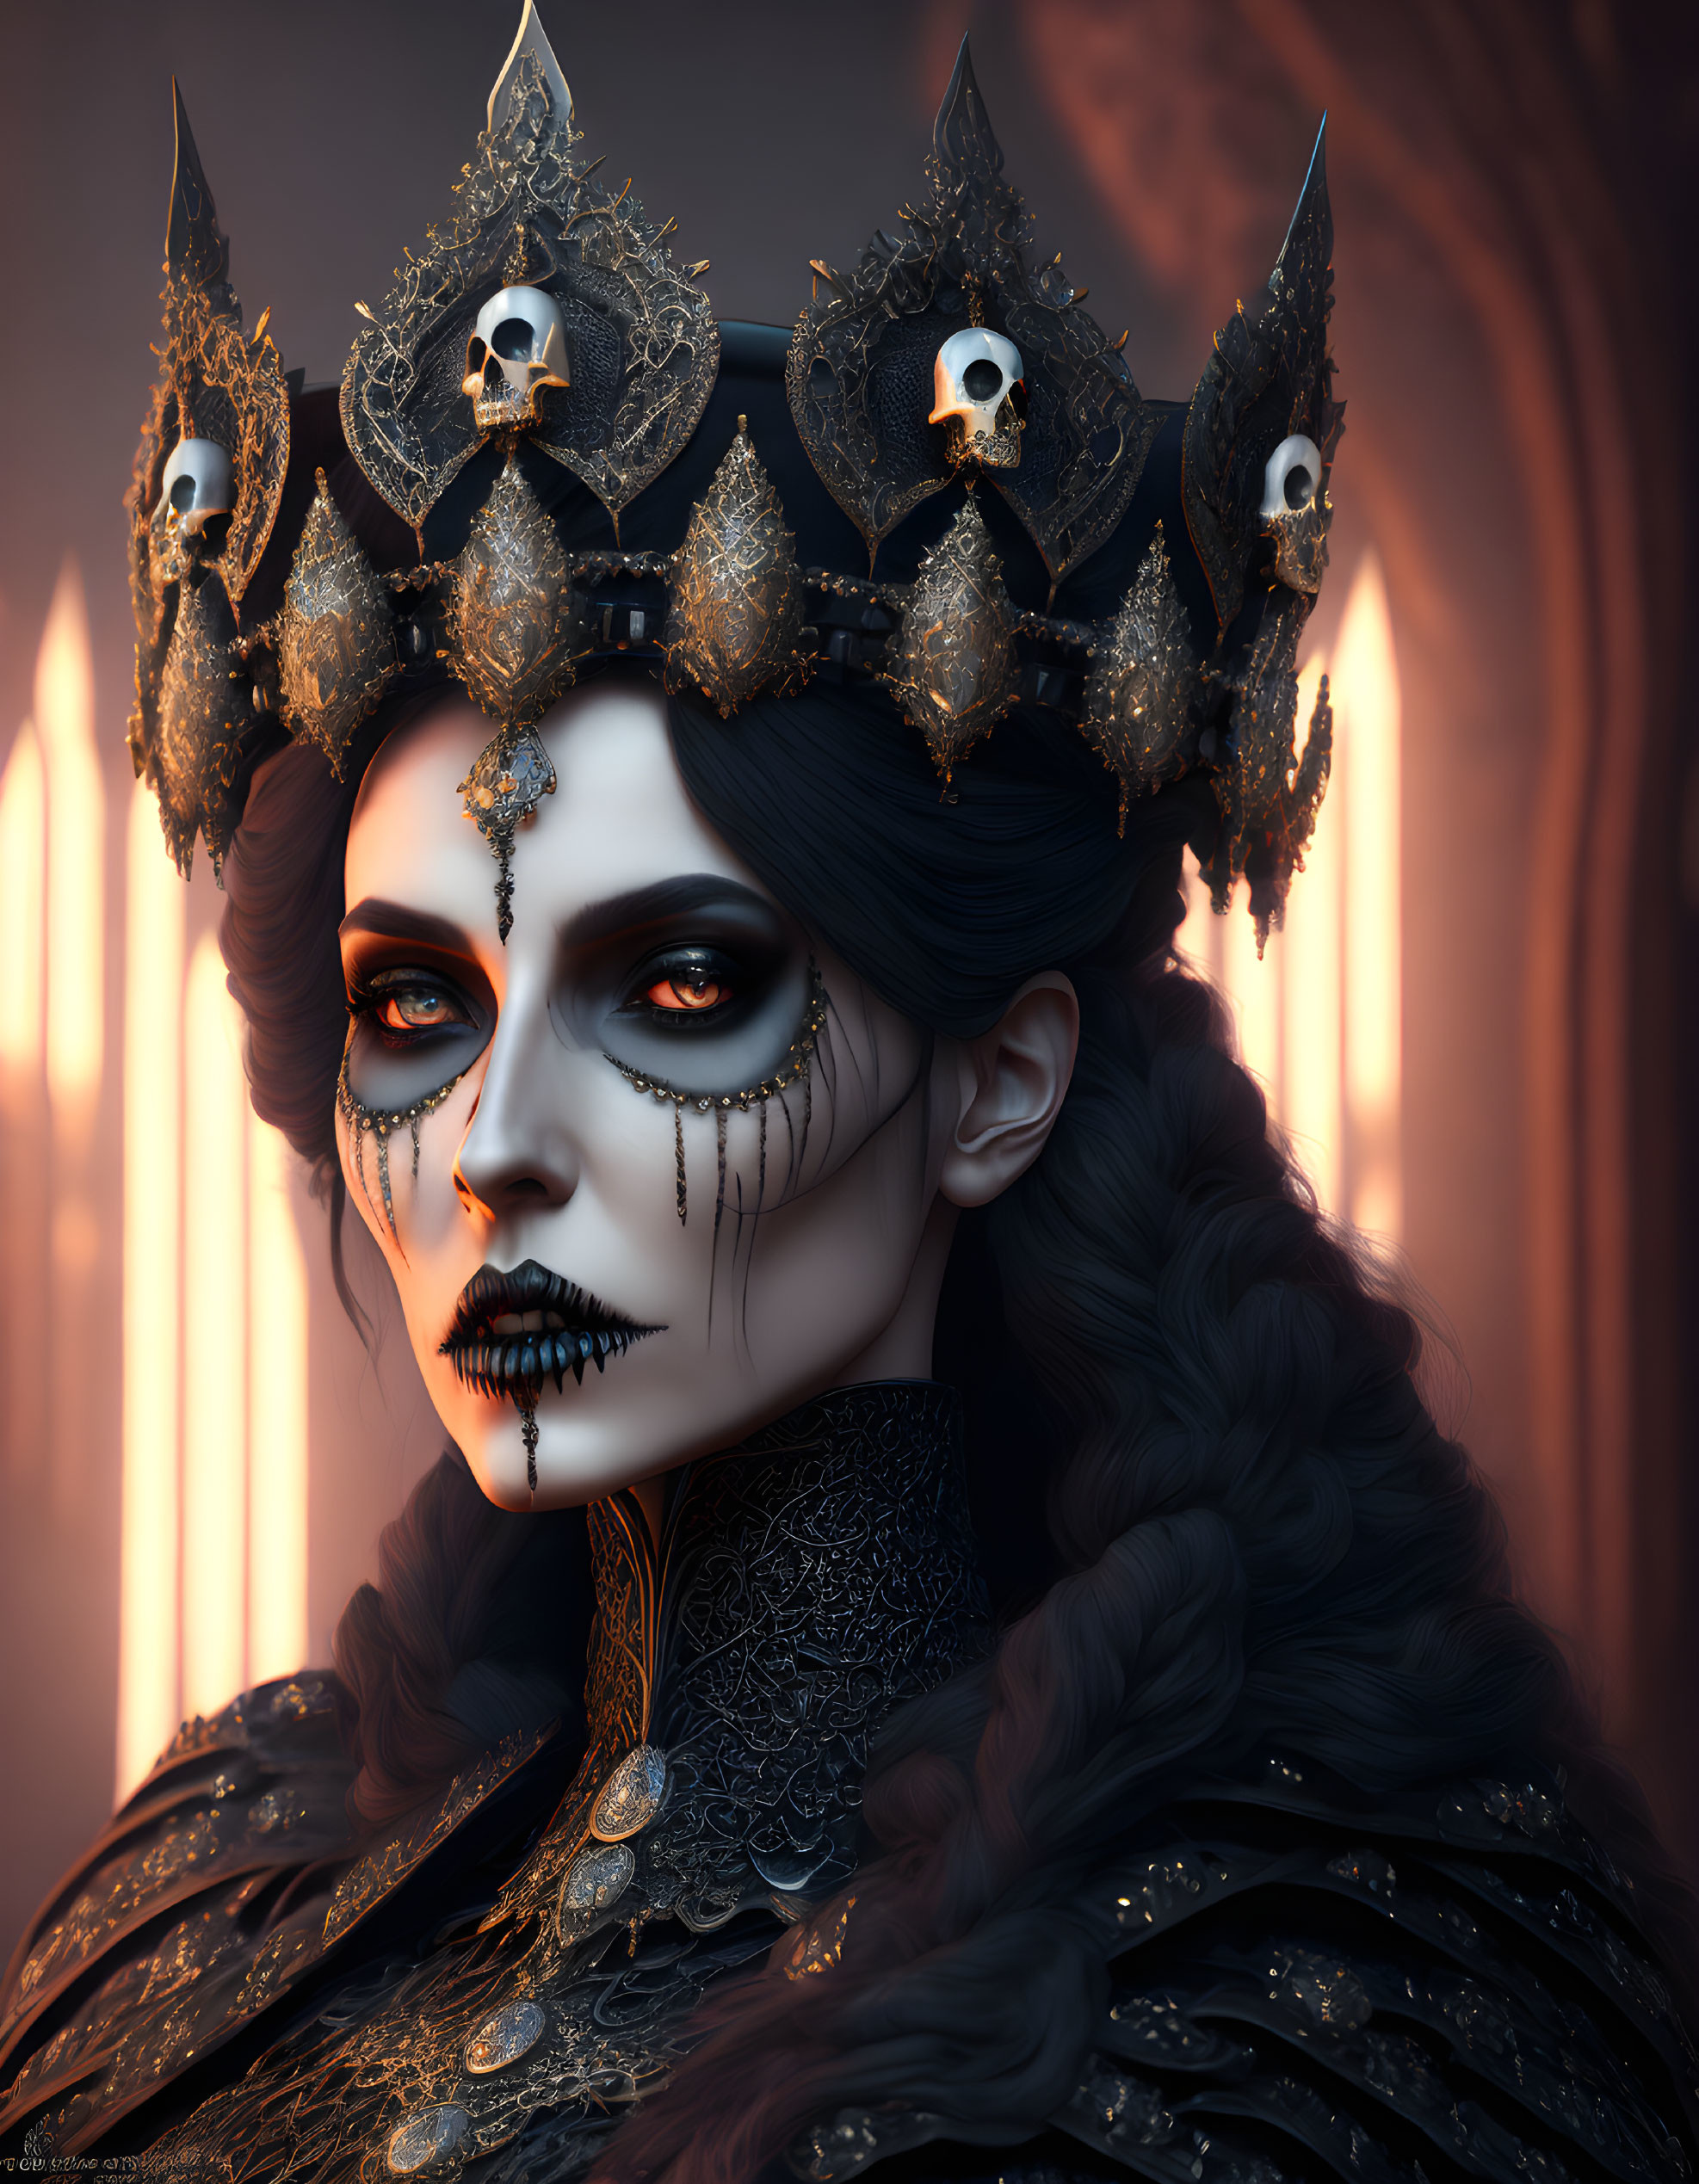 Dark regal woman in skull crown and dramatic makeup against dimly lit columns